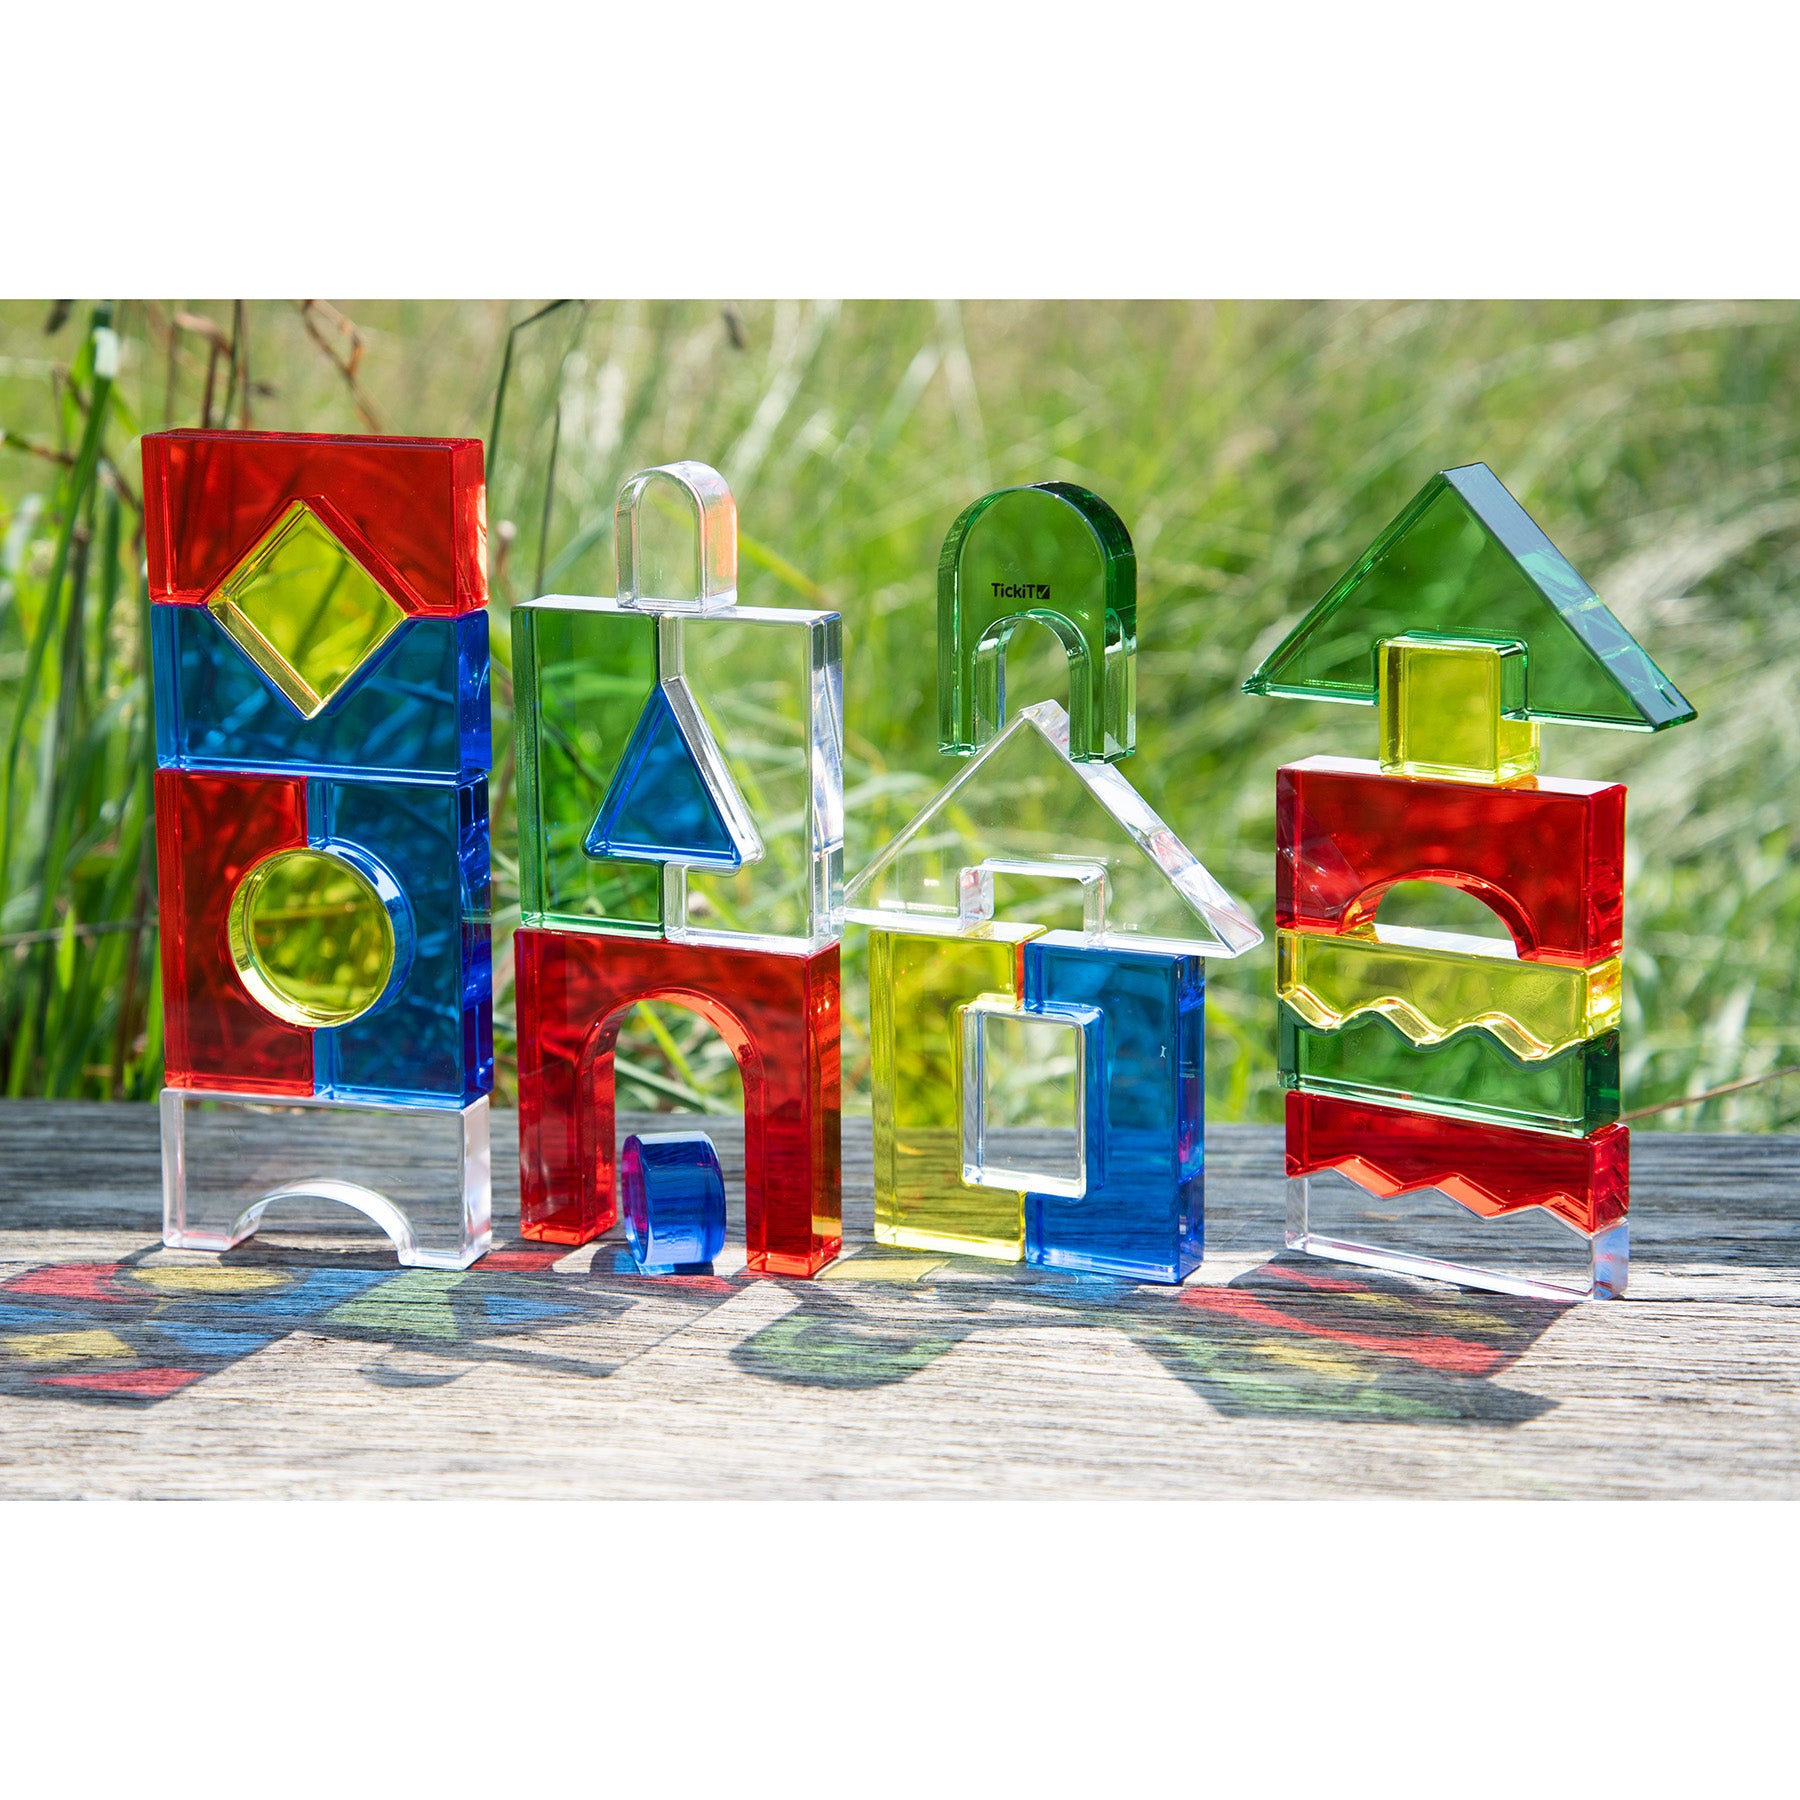 Color Crystal Block Set - Set of 25 - A1 School Supplies